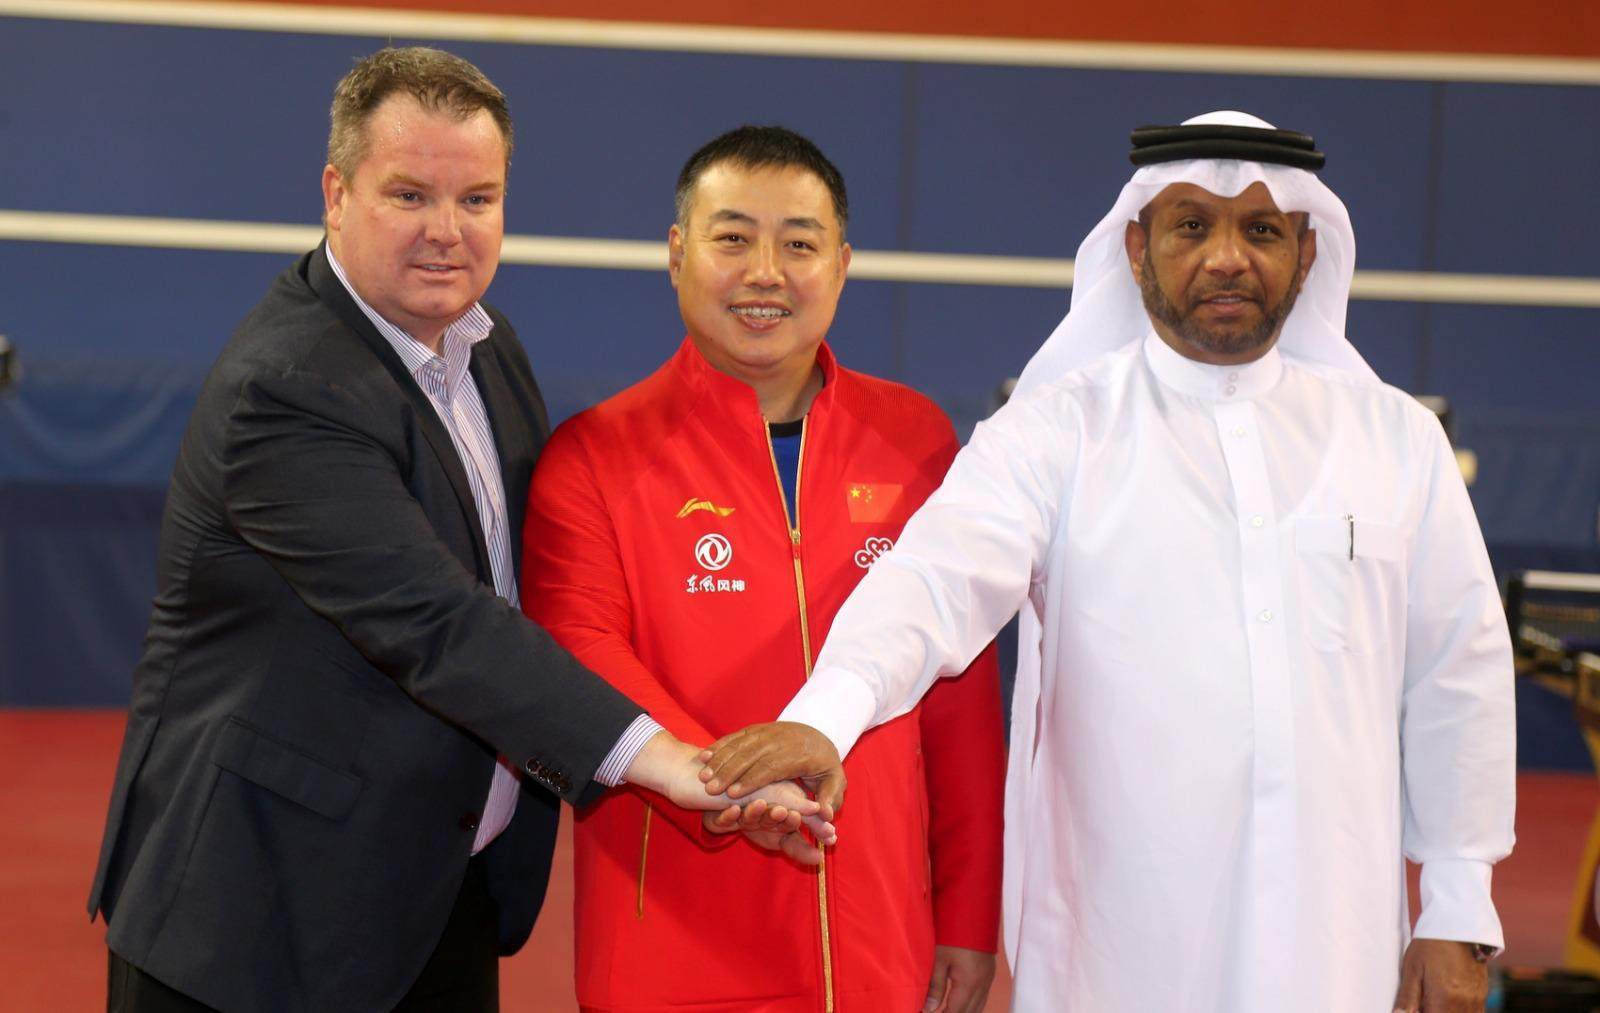 ITTF chief, Steve Dainton; CTTA President, Liu Guoliang and QTTA President and ITTF Deputy President, Khalil Al-Mohannadi all unite to support affected Chinese table tennis players ©ITTF